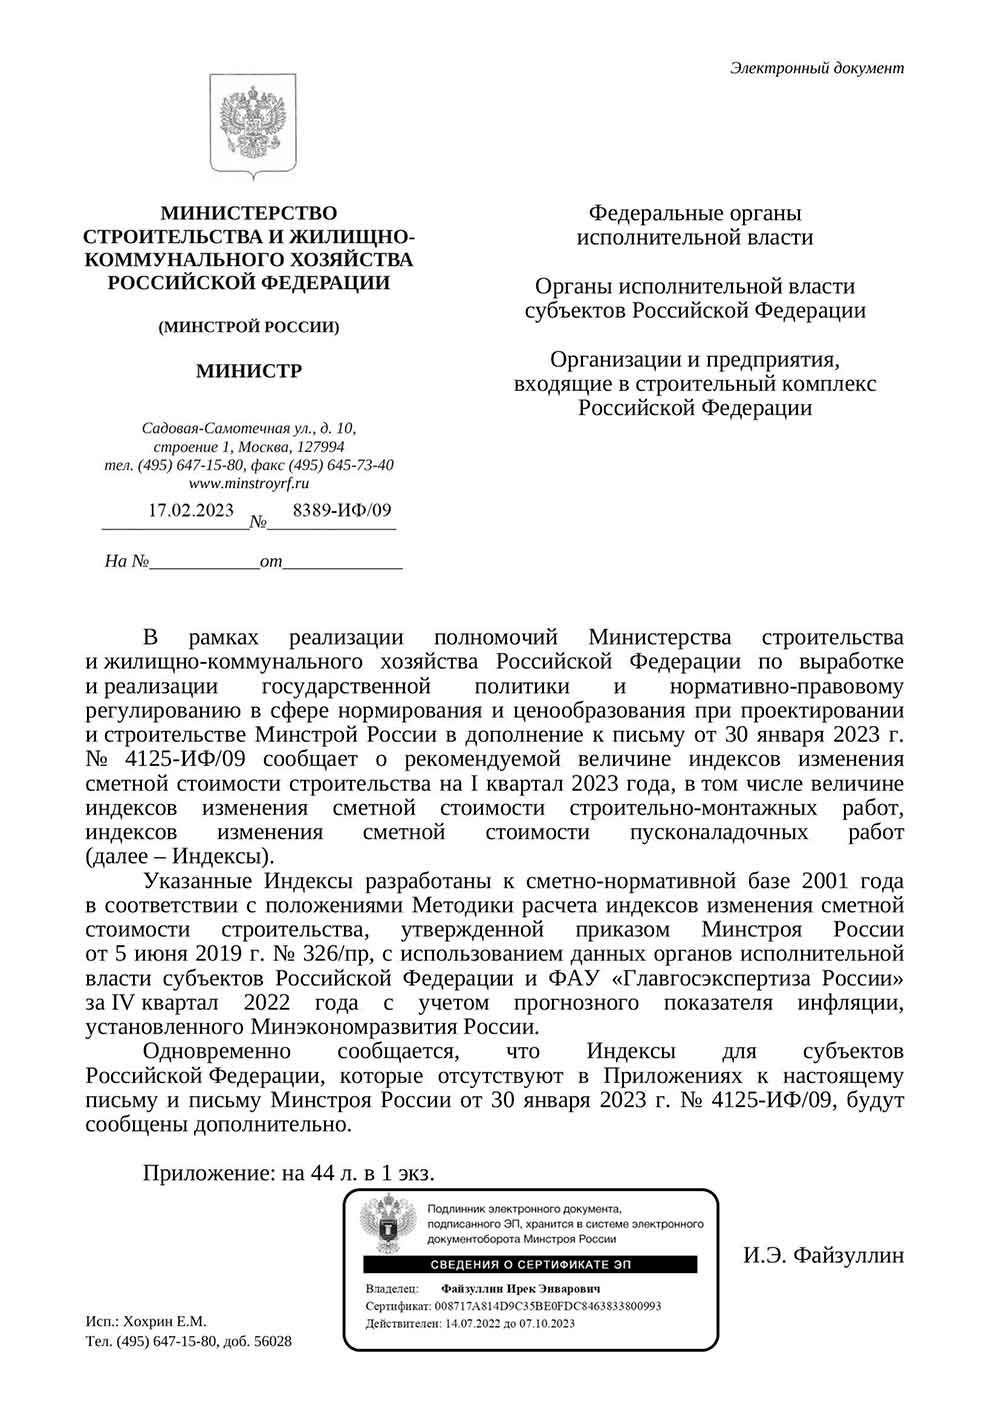 Письмо Минстроя РФ №8389-ИФ/09 от 17.02.2023 г.